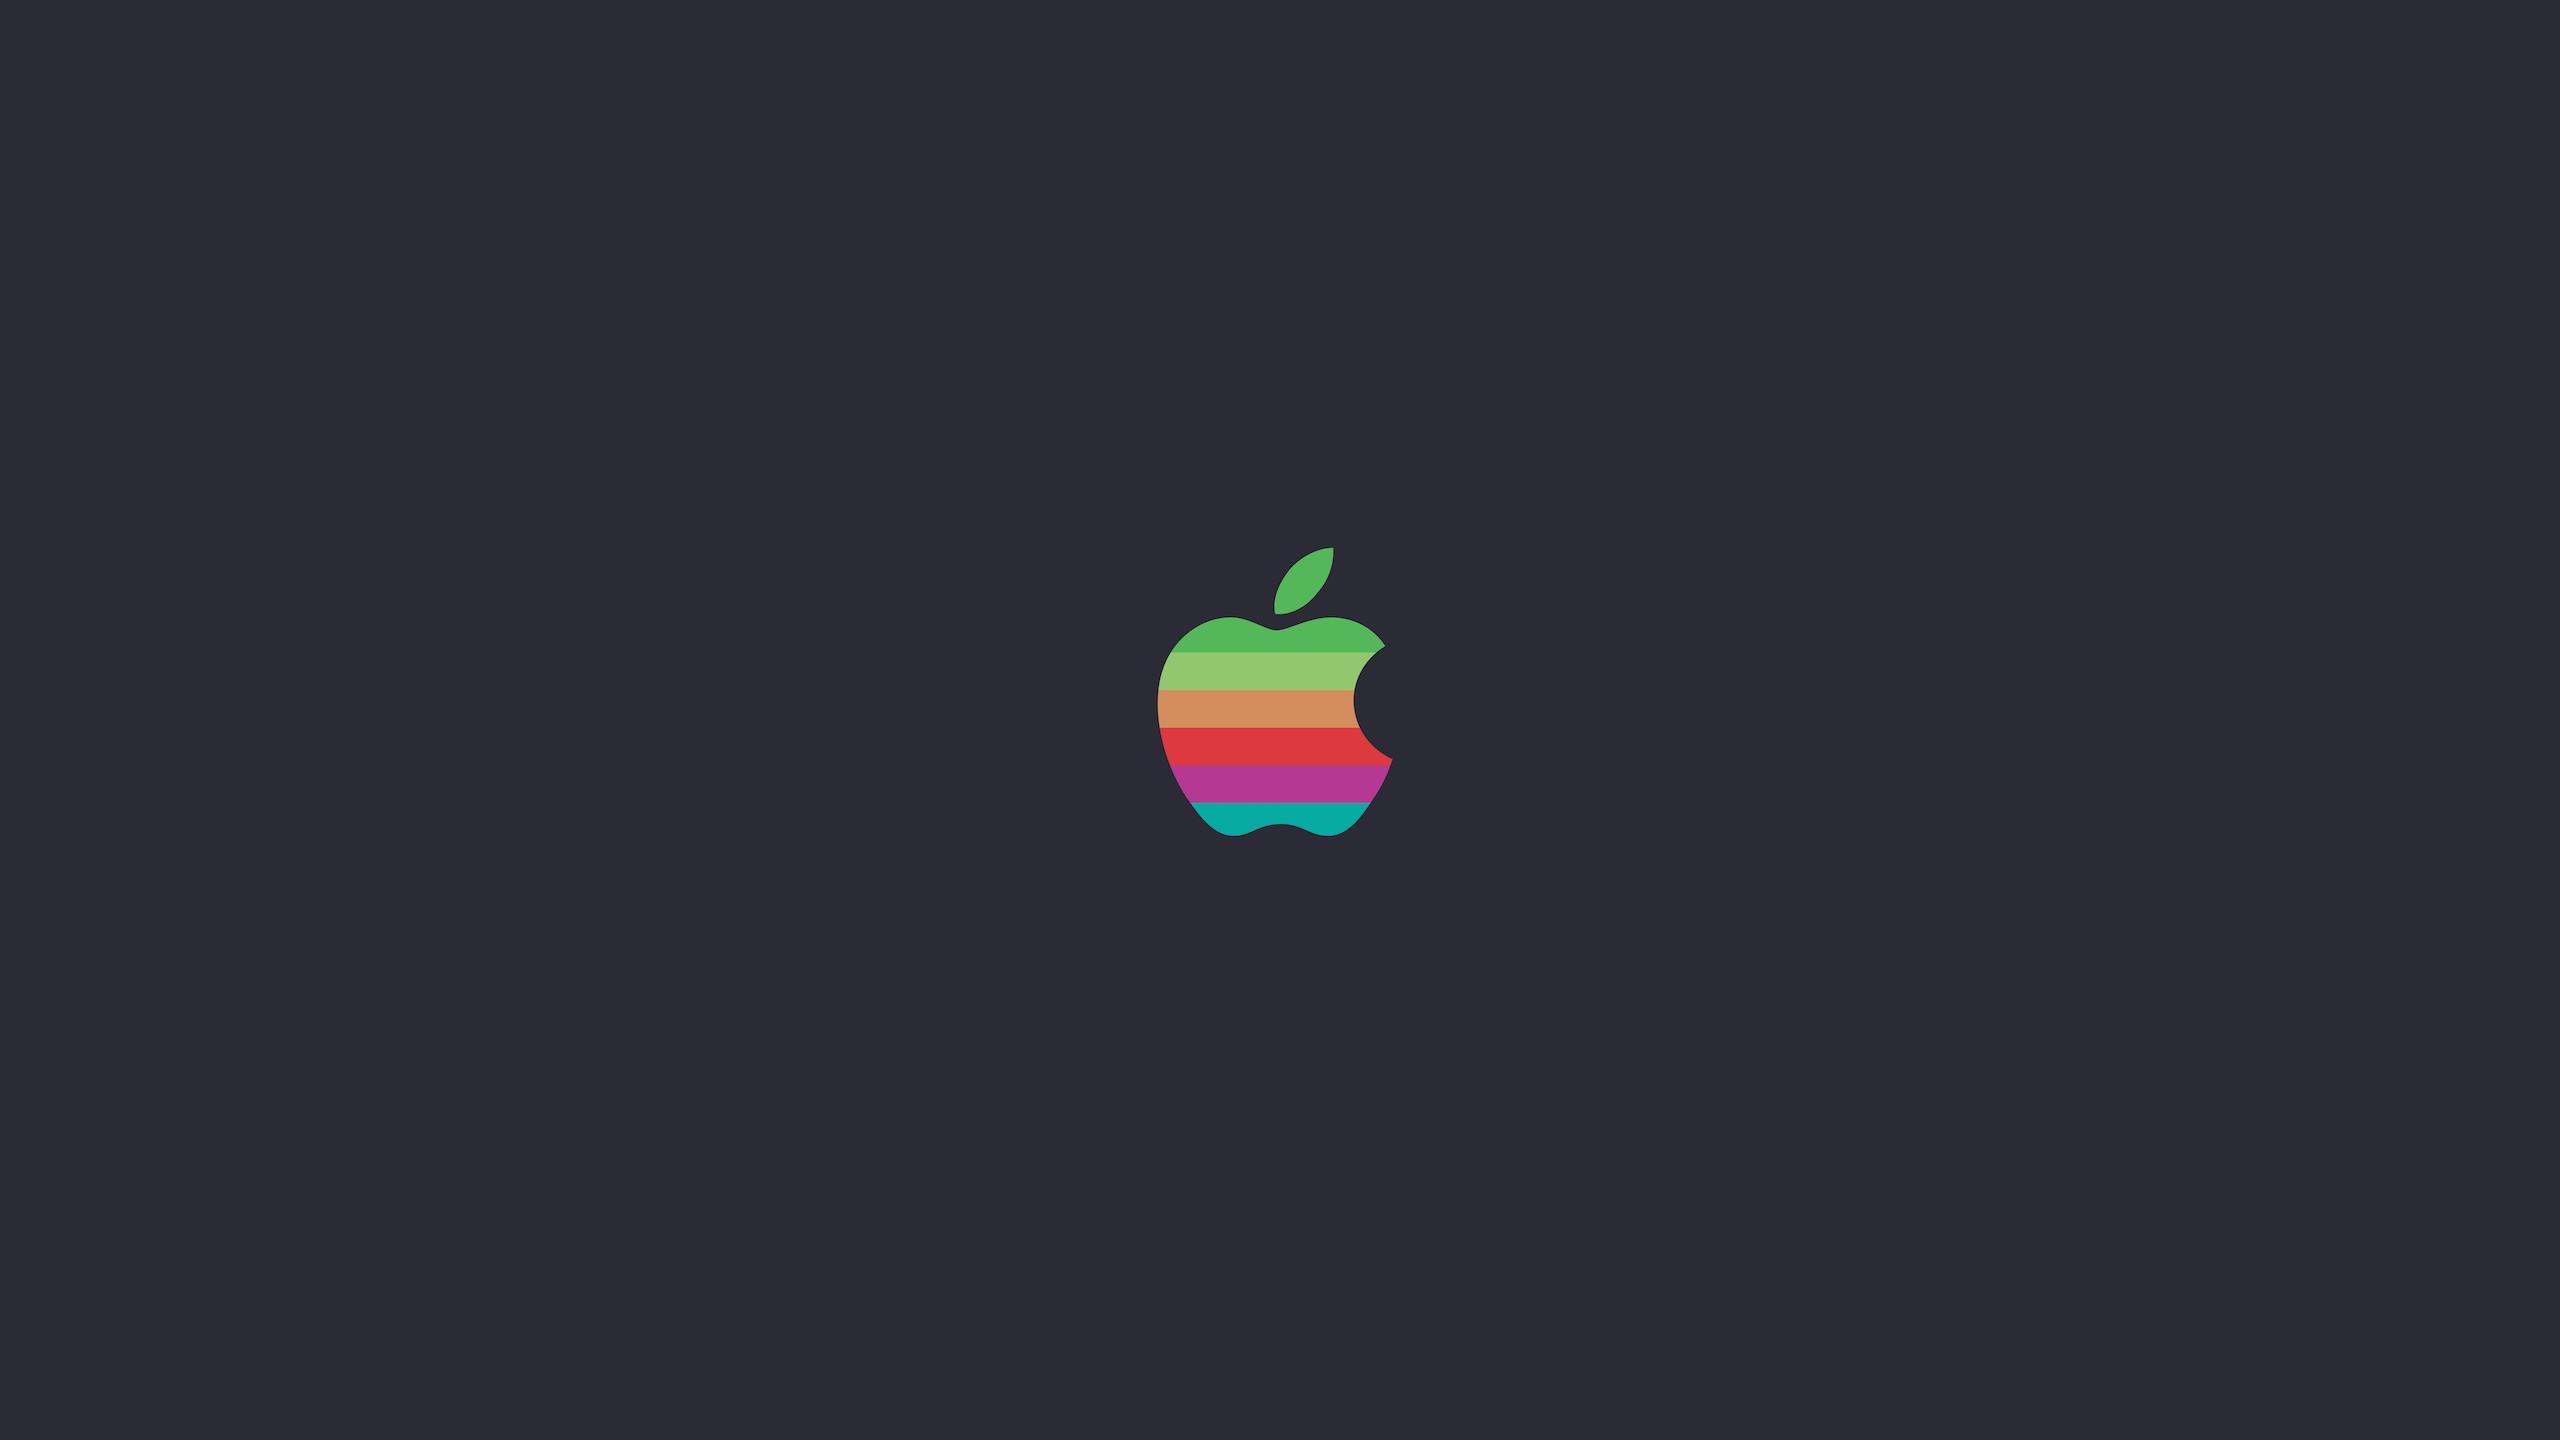 Apple wallpaper ·① Download free wallpapers for desktop ...